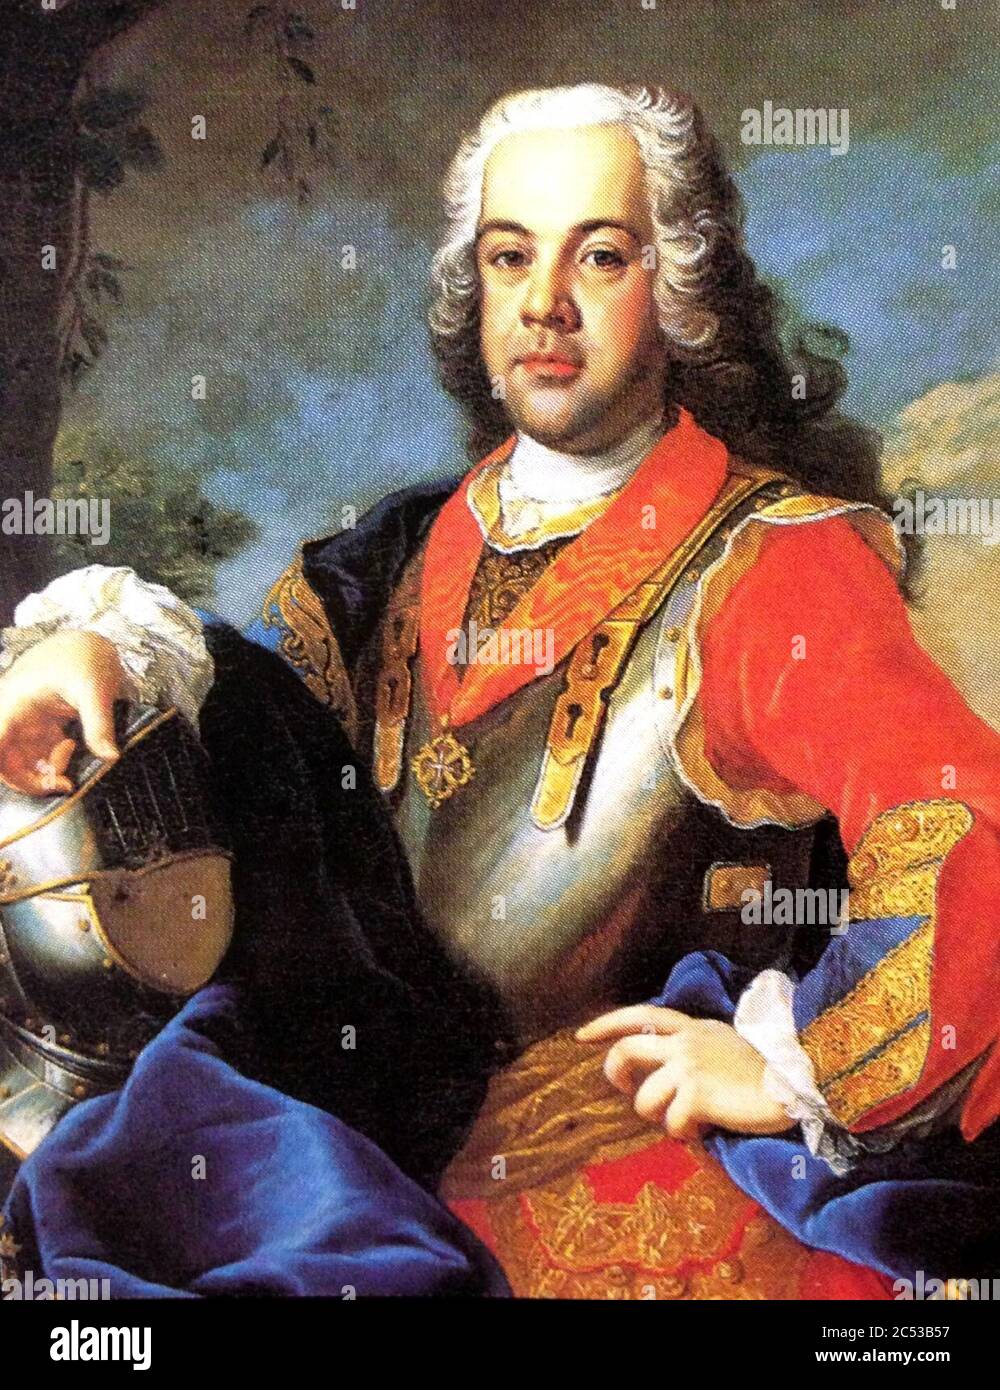 Infante Francisco, Duque de Beja. Stock Photo